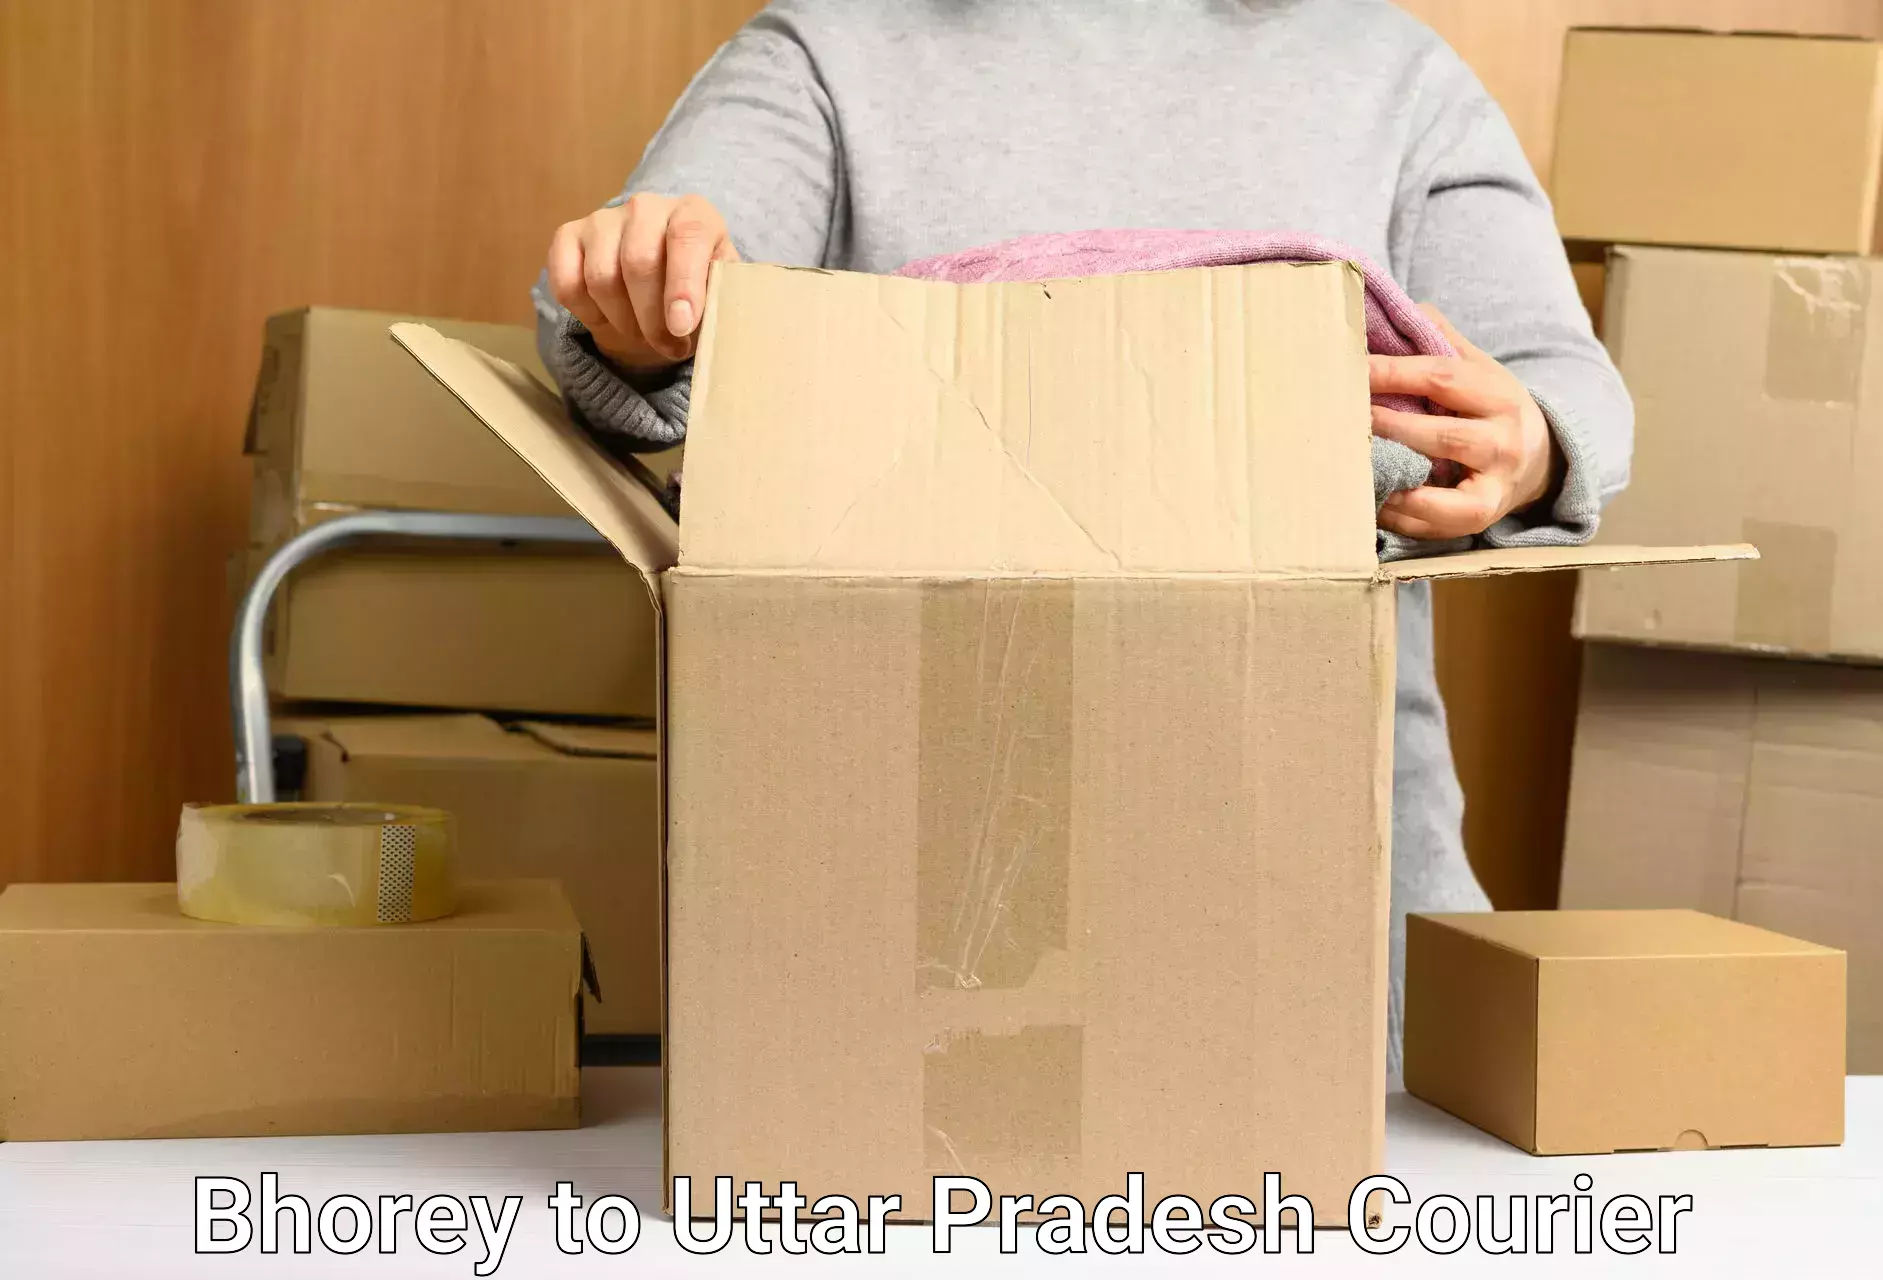 Flexible parcel services Bhorey to Aligarh